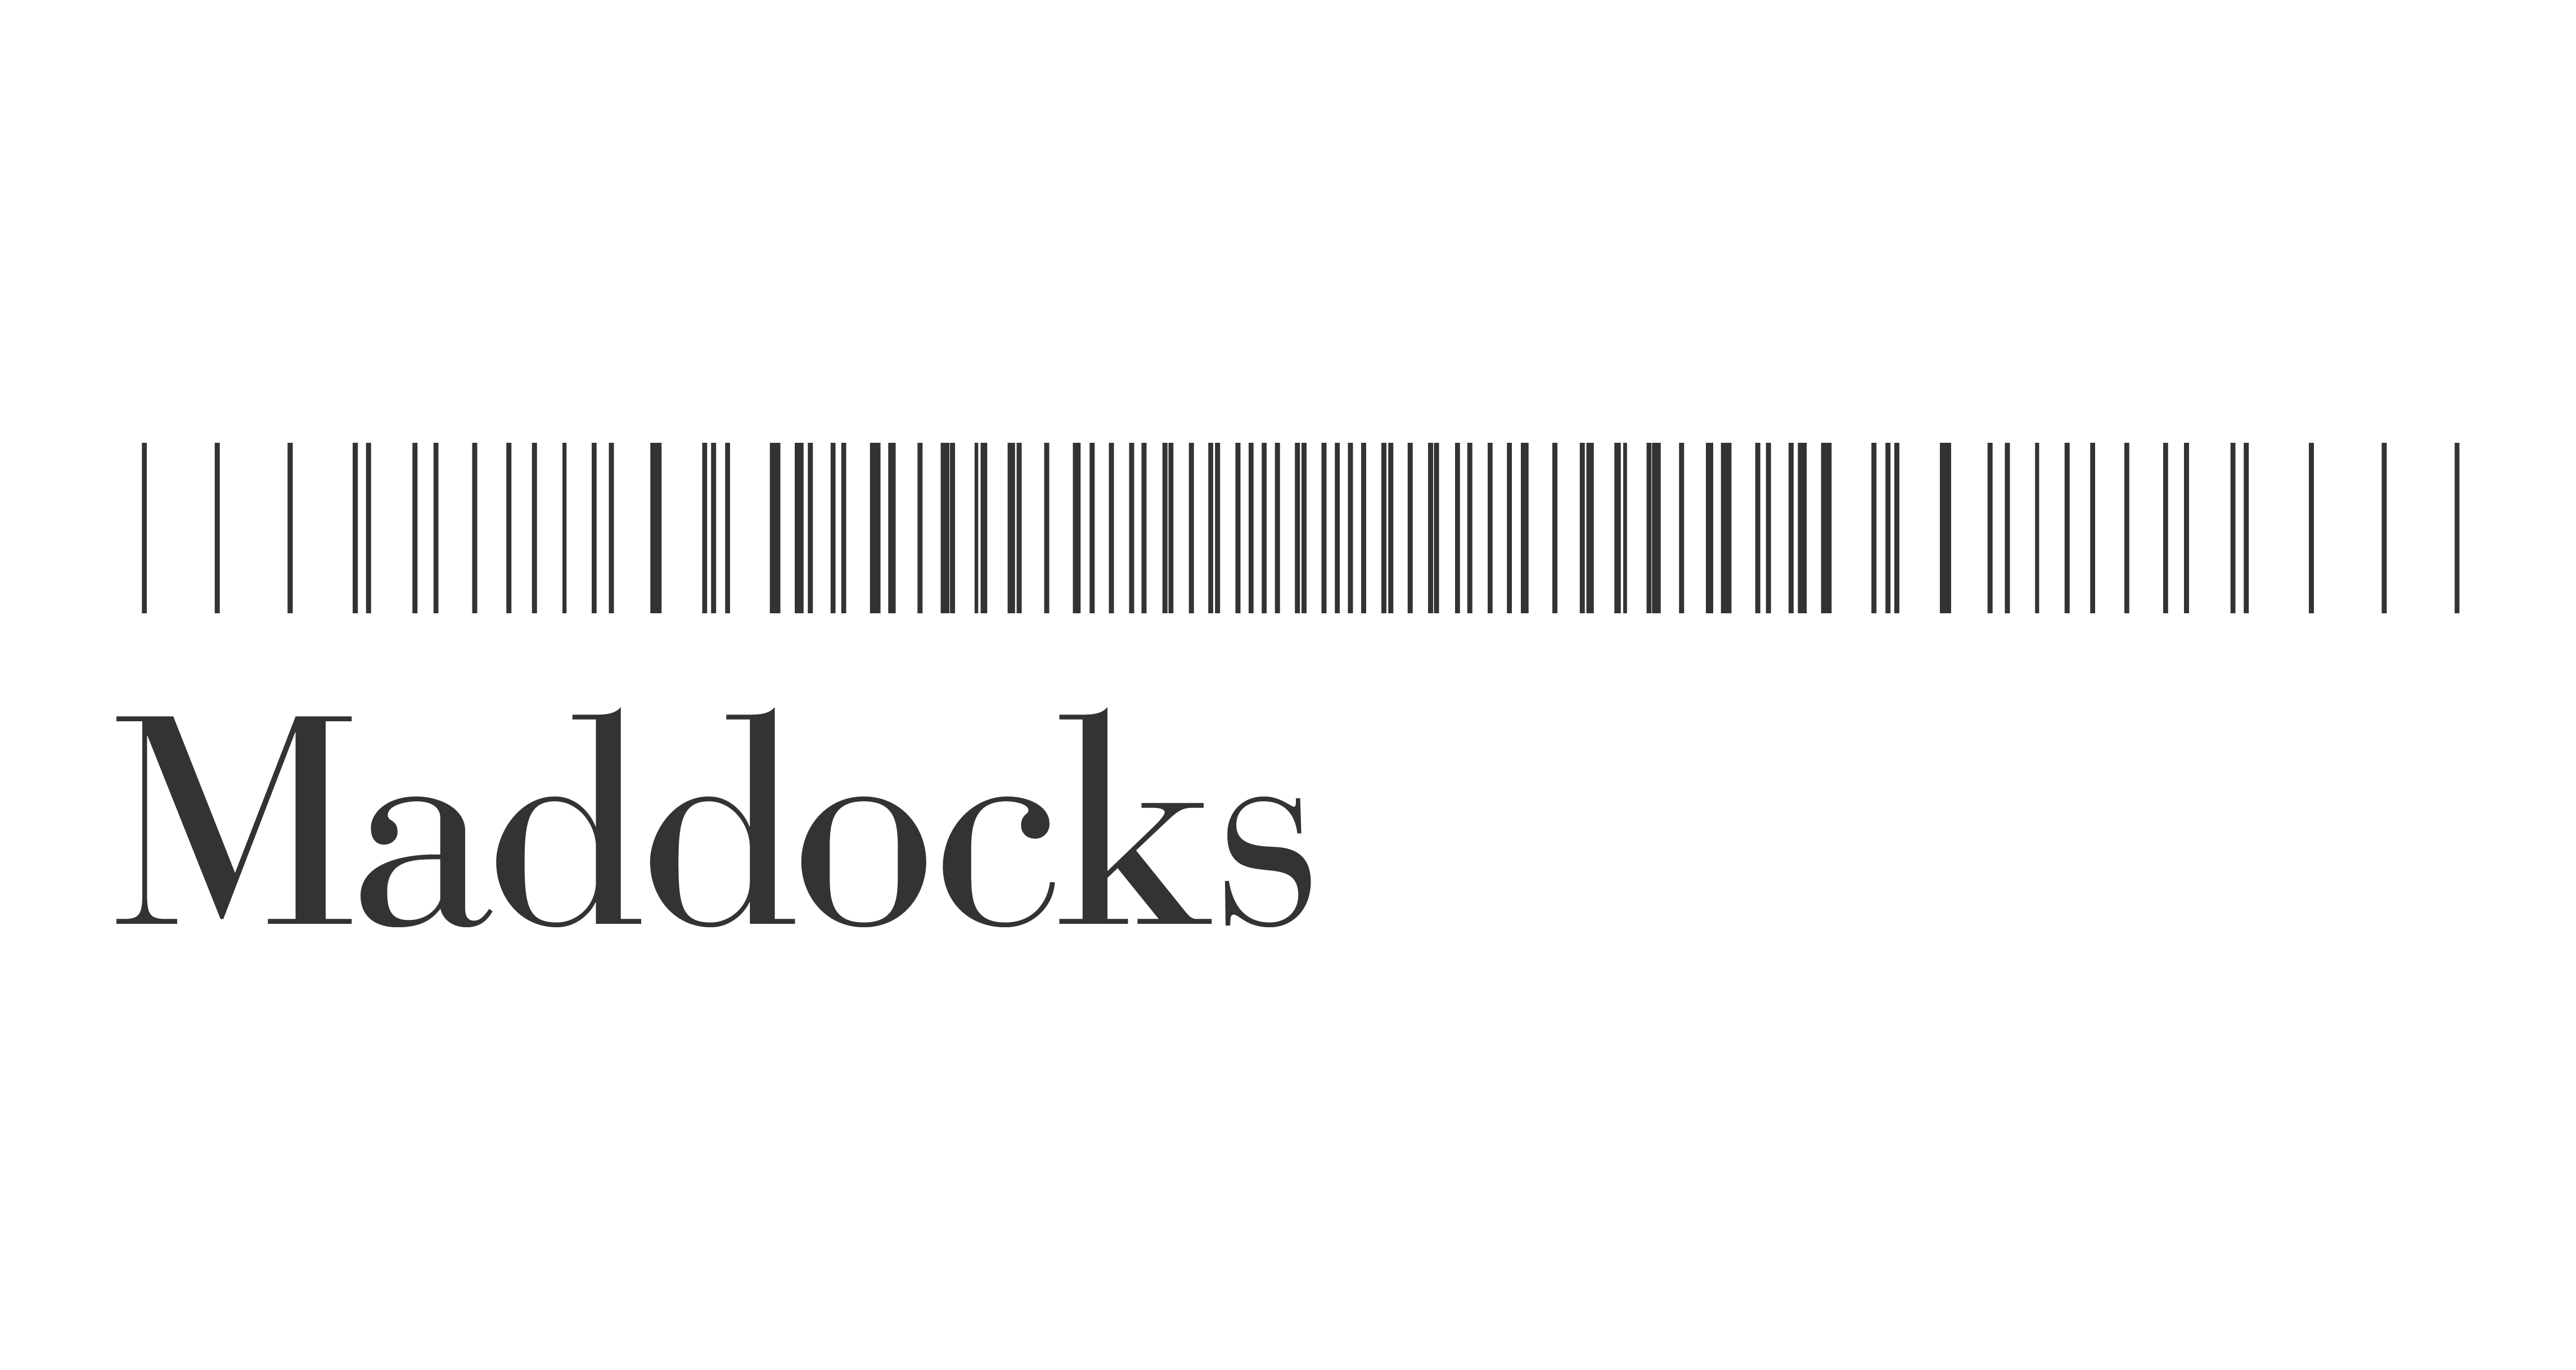 Maddocks-logo-charcoal1